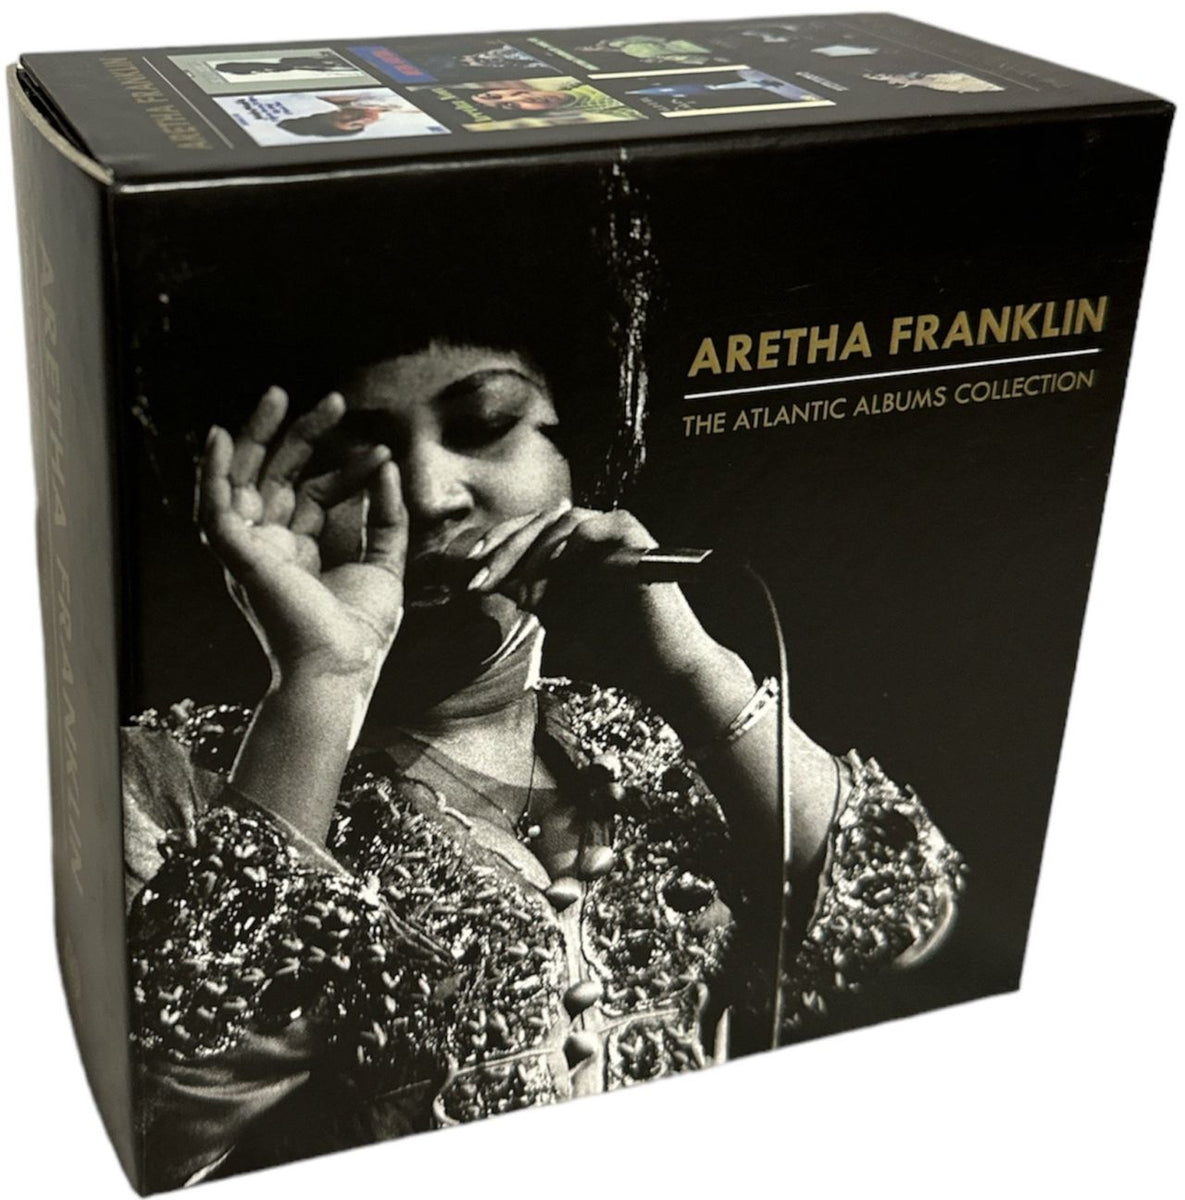 Aretha Franklin The Atlantic Albums Collection UK Cd album box set